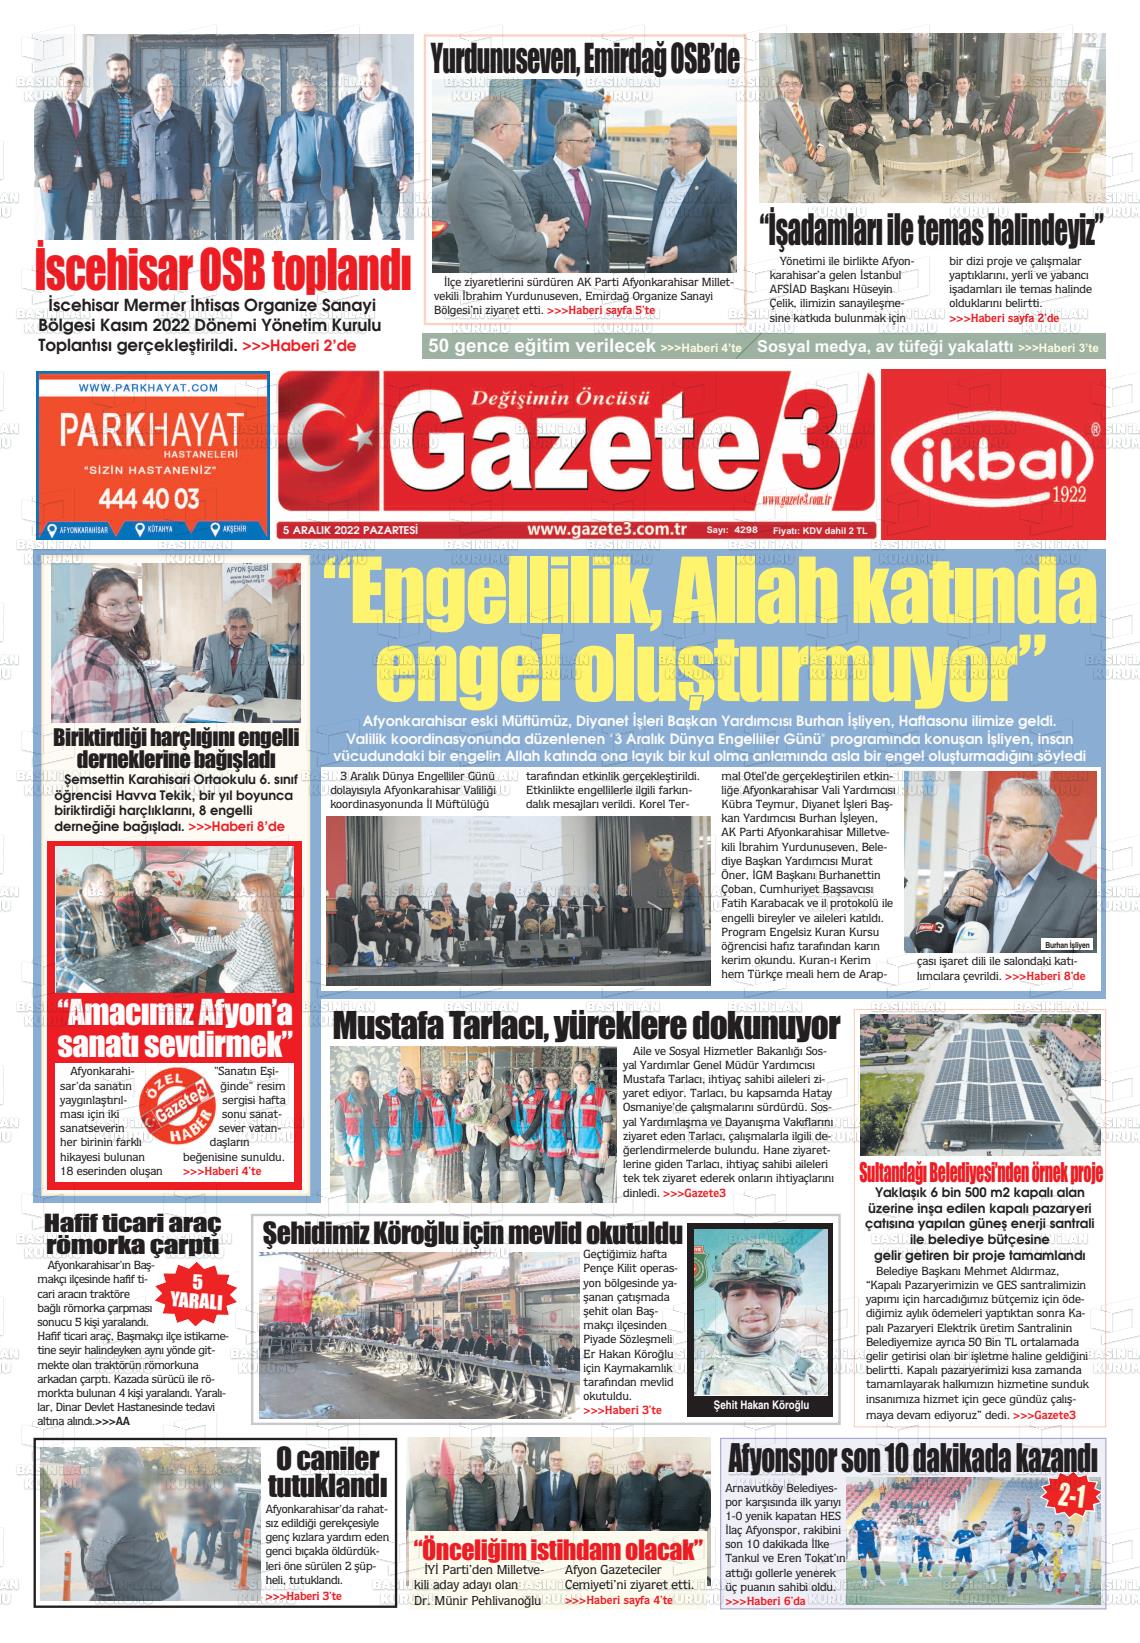 05 Aralık 2022 Gazete 3 Gazete Manşeti